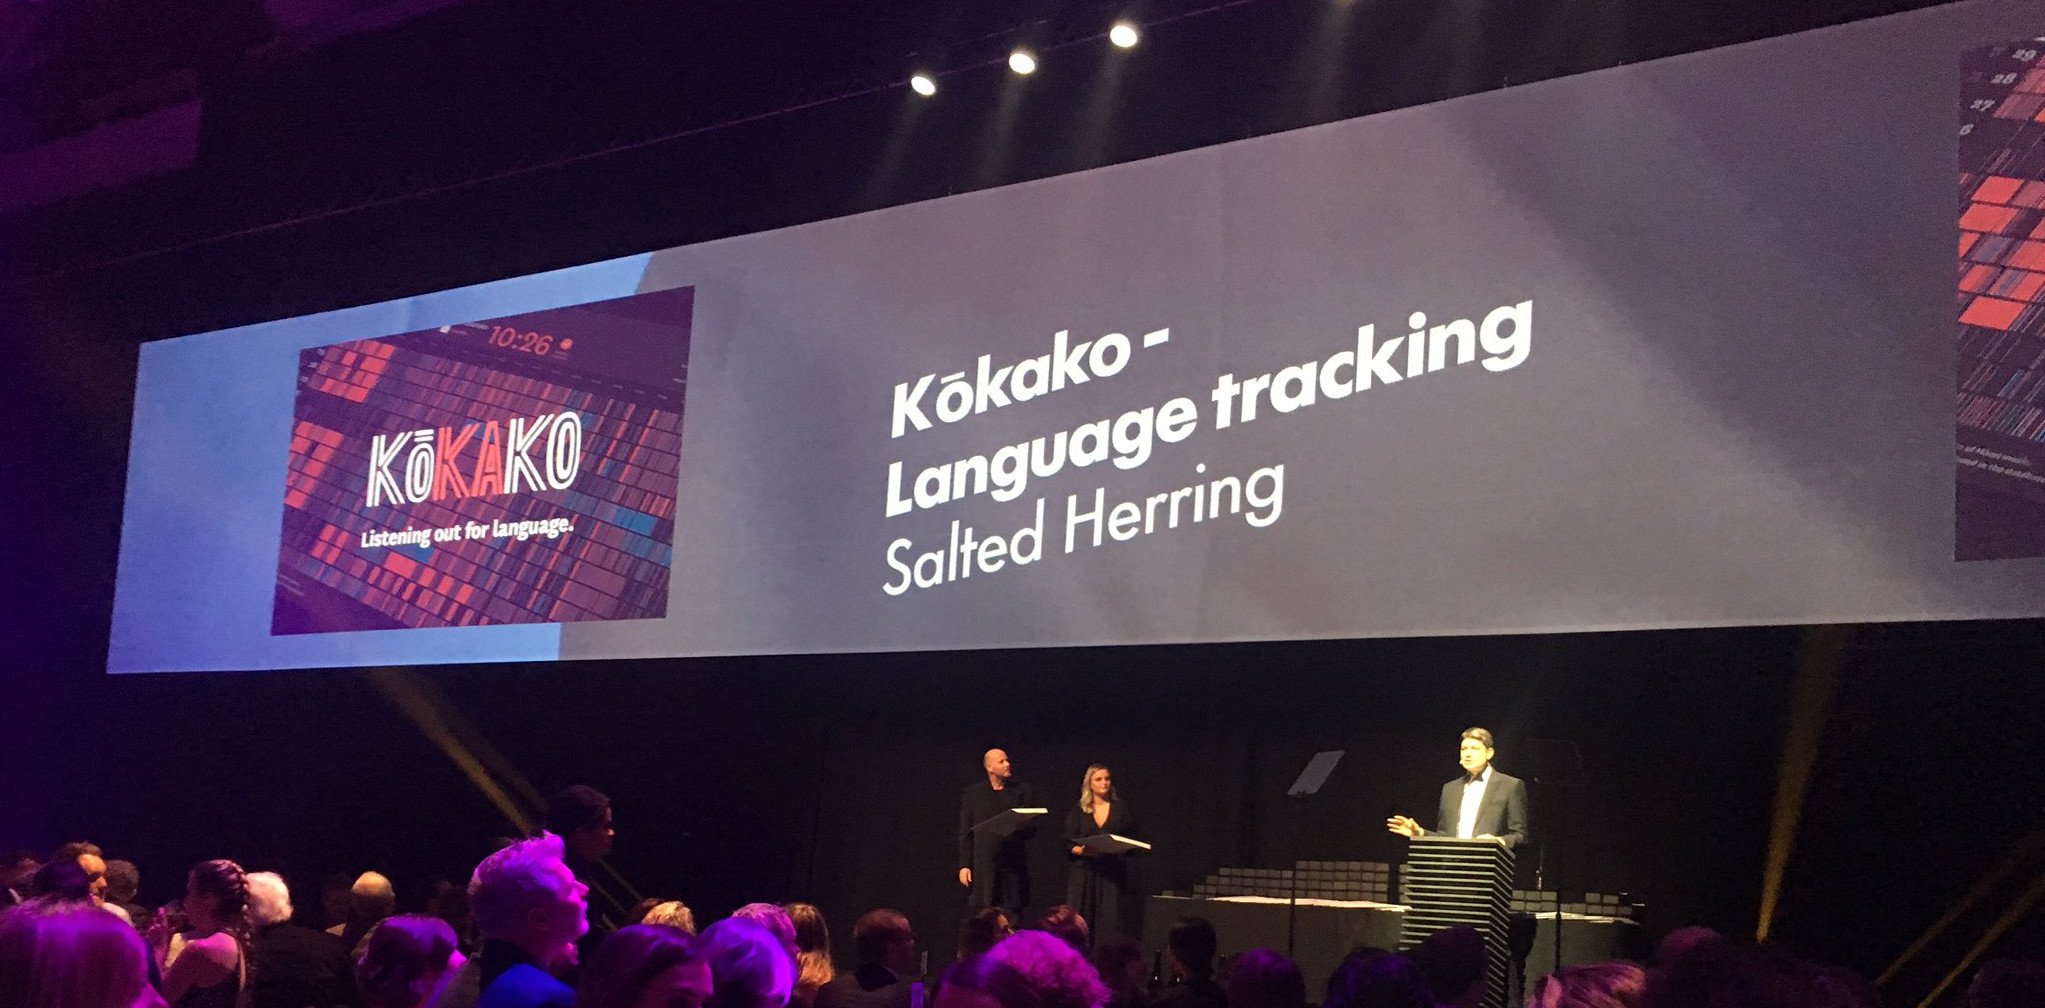 The Kōkako award being announced, photo by Simon Winter of Salted Herring